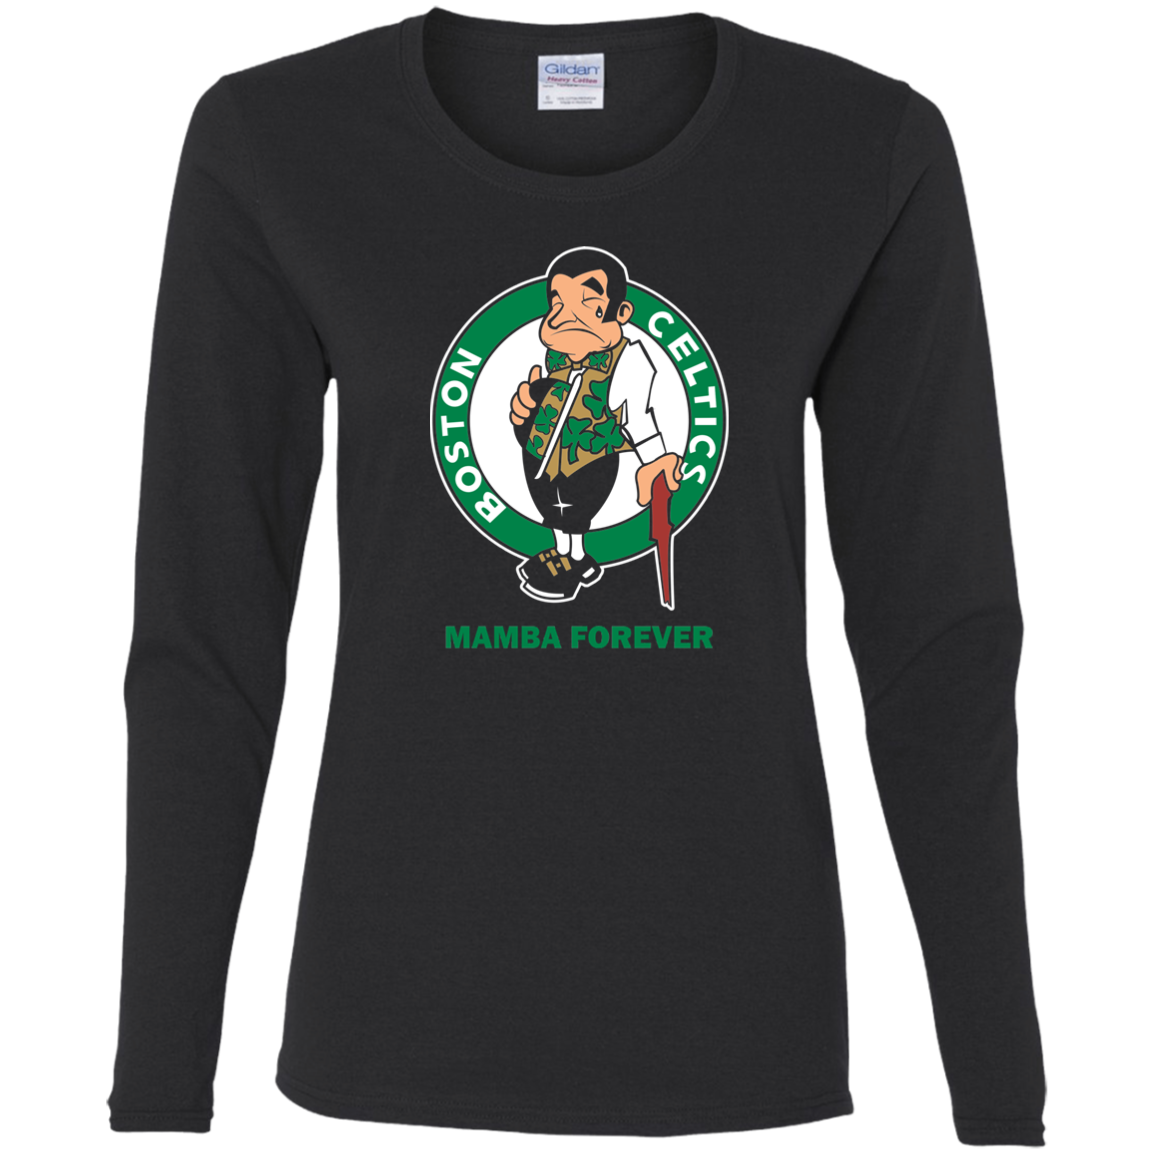 ArtichokeUSA Custom Design. RIP Kobe. Mamba Forever. Celtics / Lakers Fan Art Tribute. Ladies' 100% Cotton Long Sleeve T-Shirt